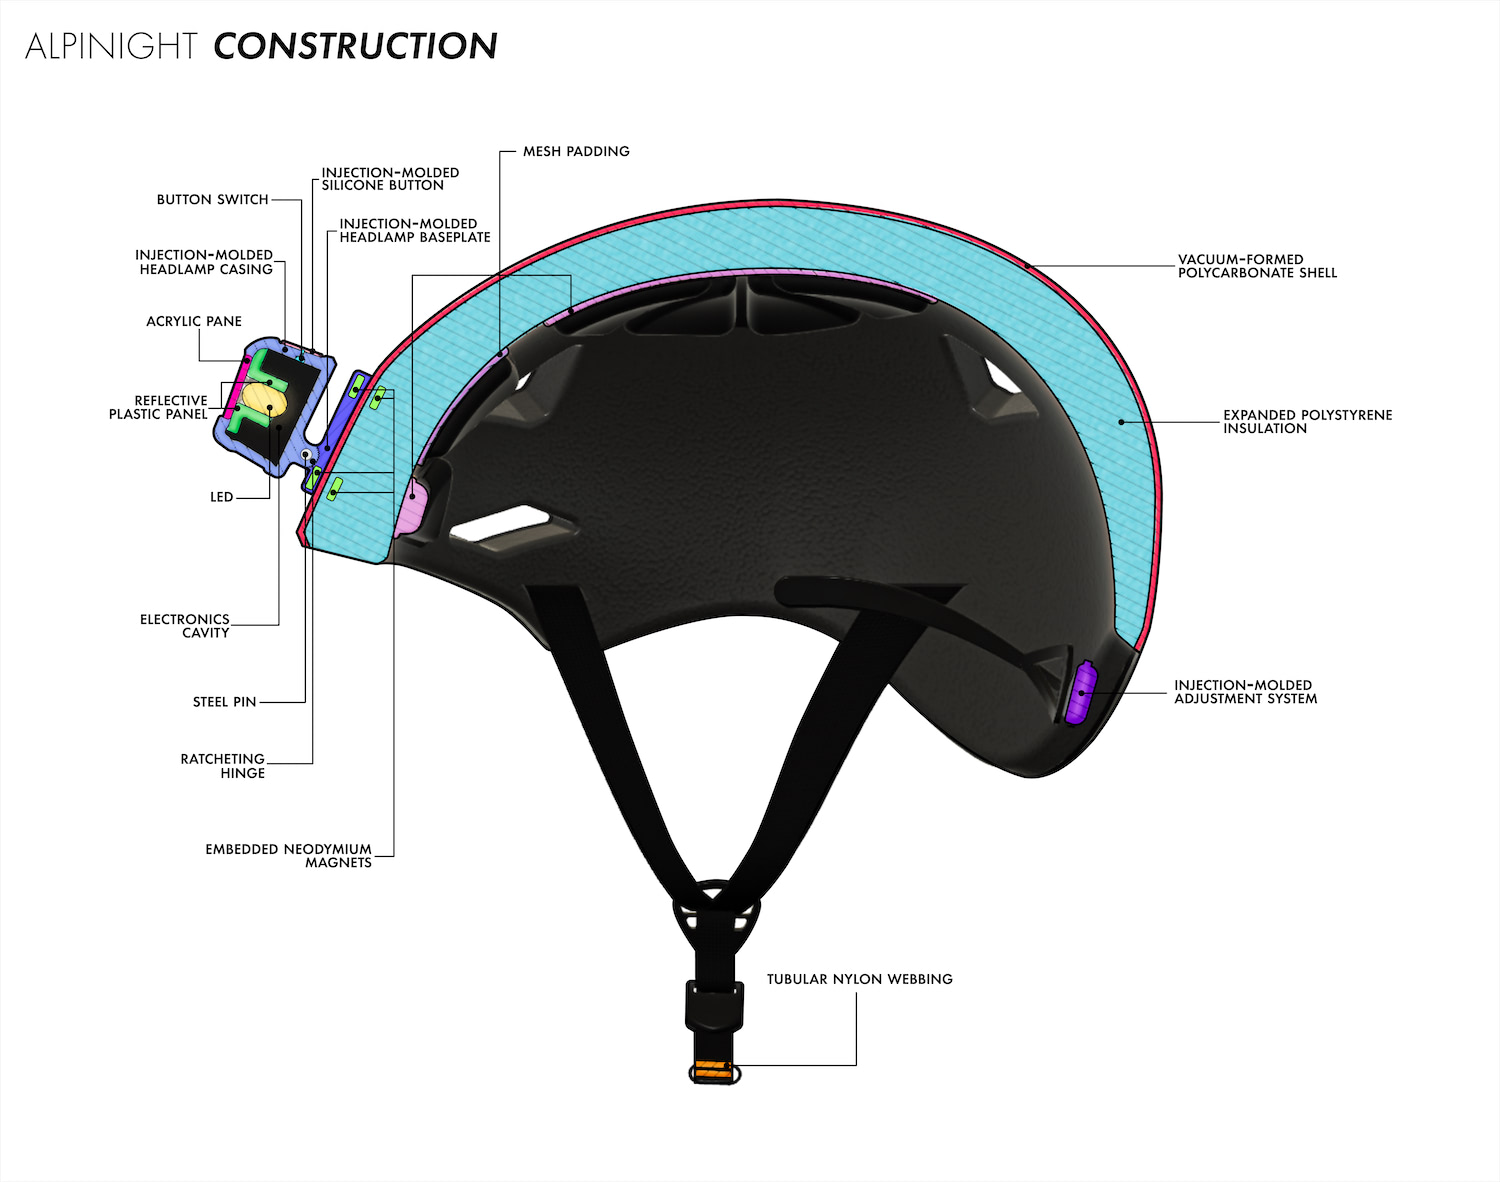 Cross-sectional analysis of the Alpinight helmet and headlamp.